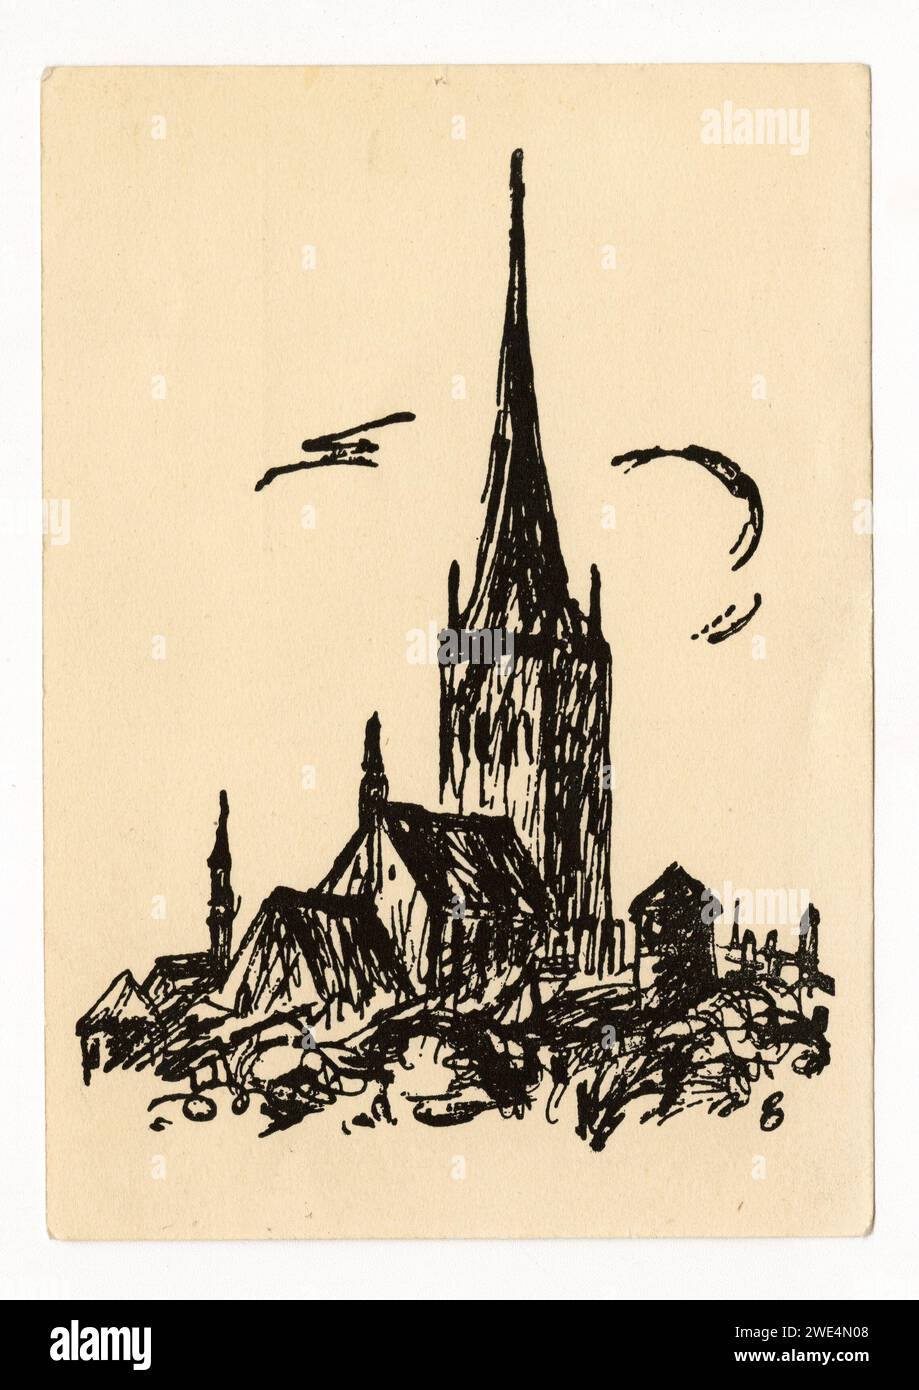 1940s postcard: Agaate Veeber drawing of St Olav's Church, Tallinn, Estonia. Stock Photo